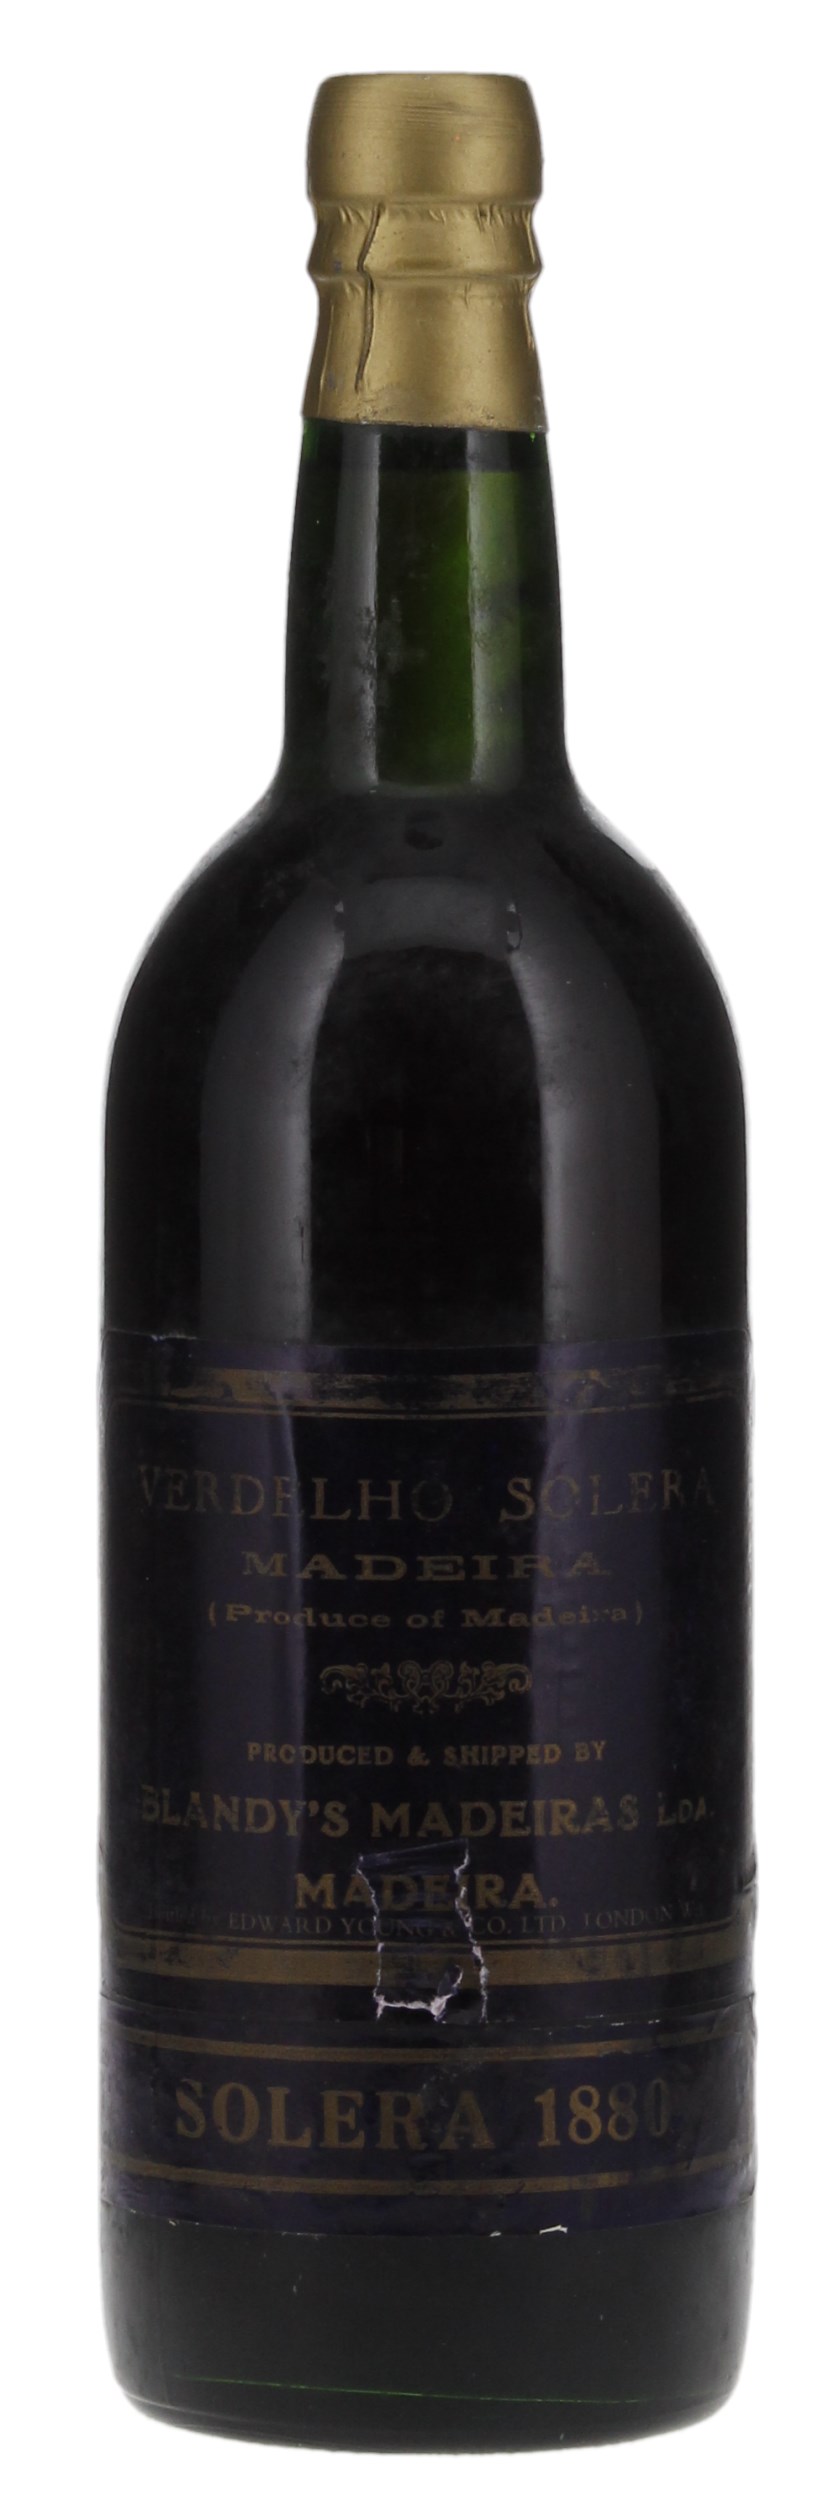 N.V. Blandy's Verdelho Solera 1880 Madeira, 750ml